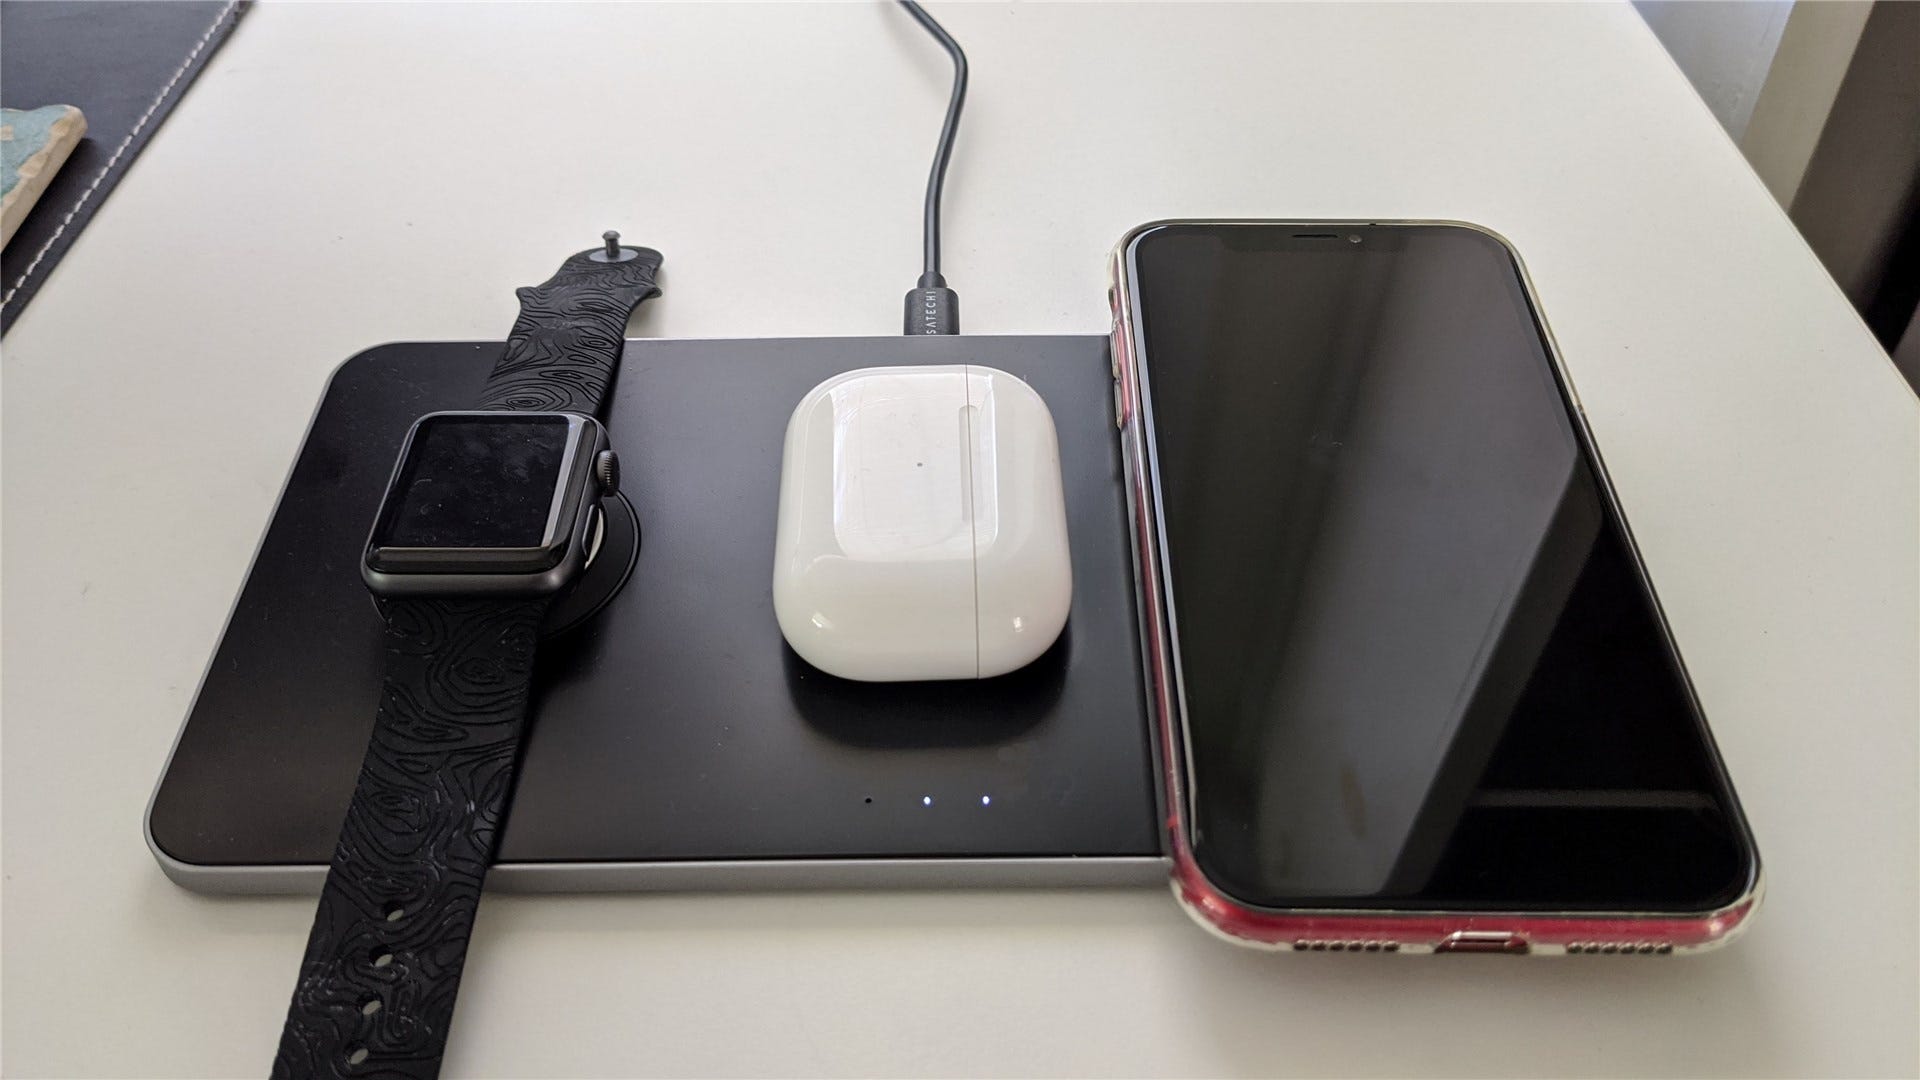 Trio Mat laddar säkert Apple Watch, AirPods Pro och iPhone XR samtidigt